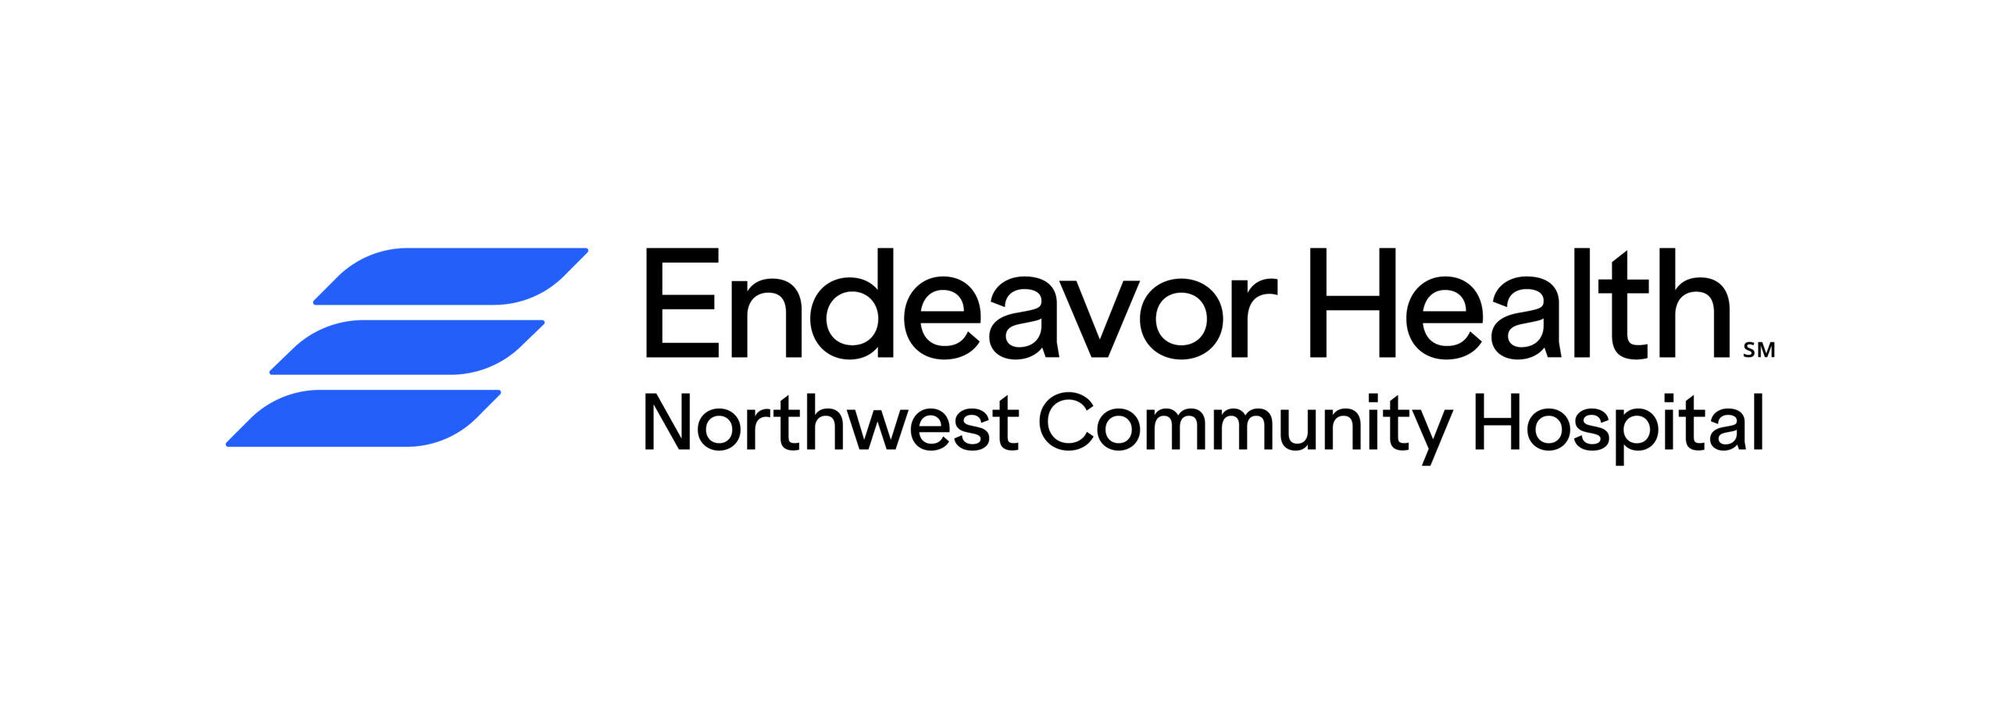 Endeavor-Health-NCH-Logo-scaled